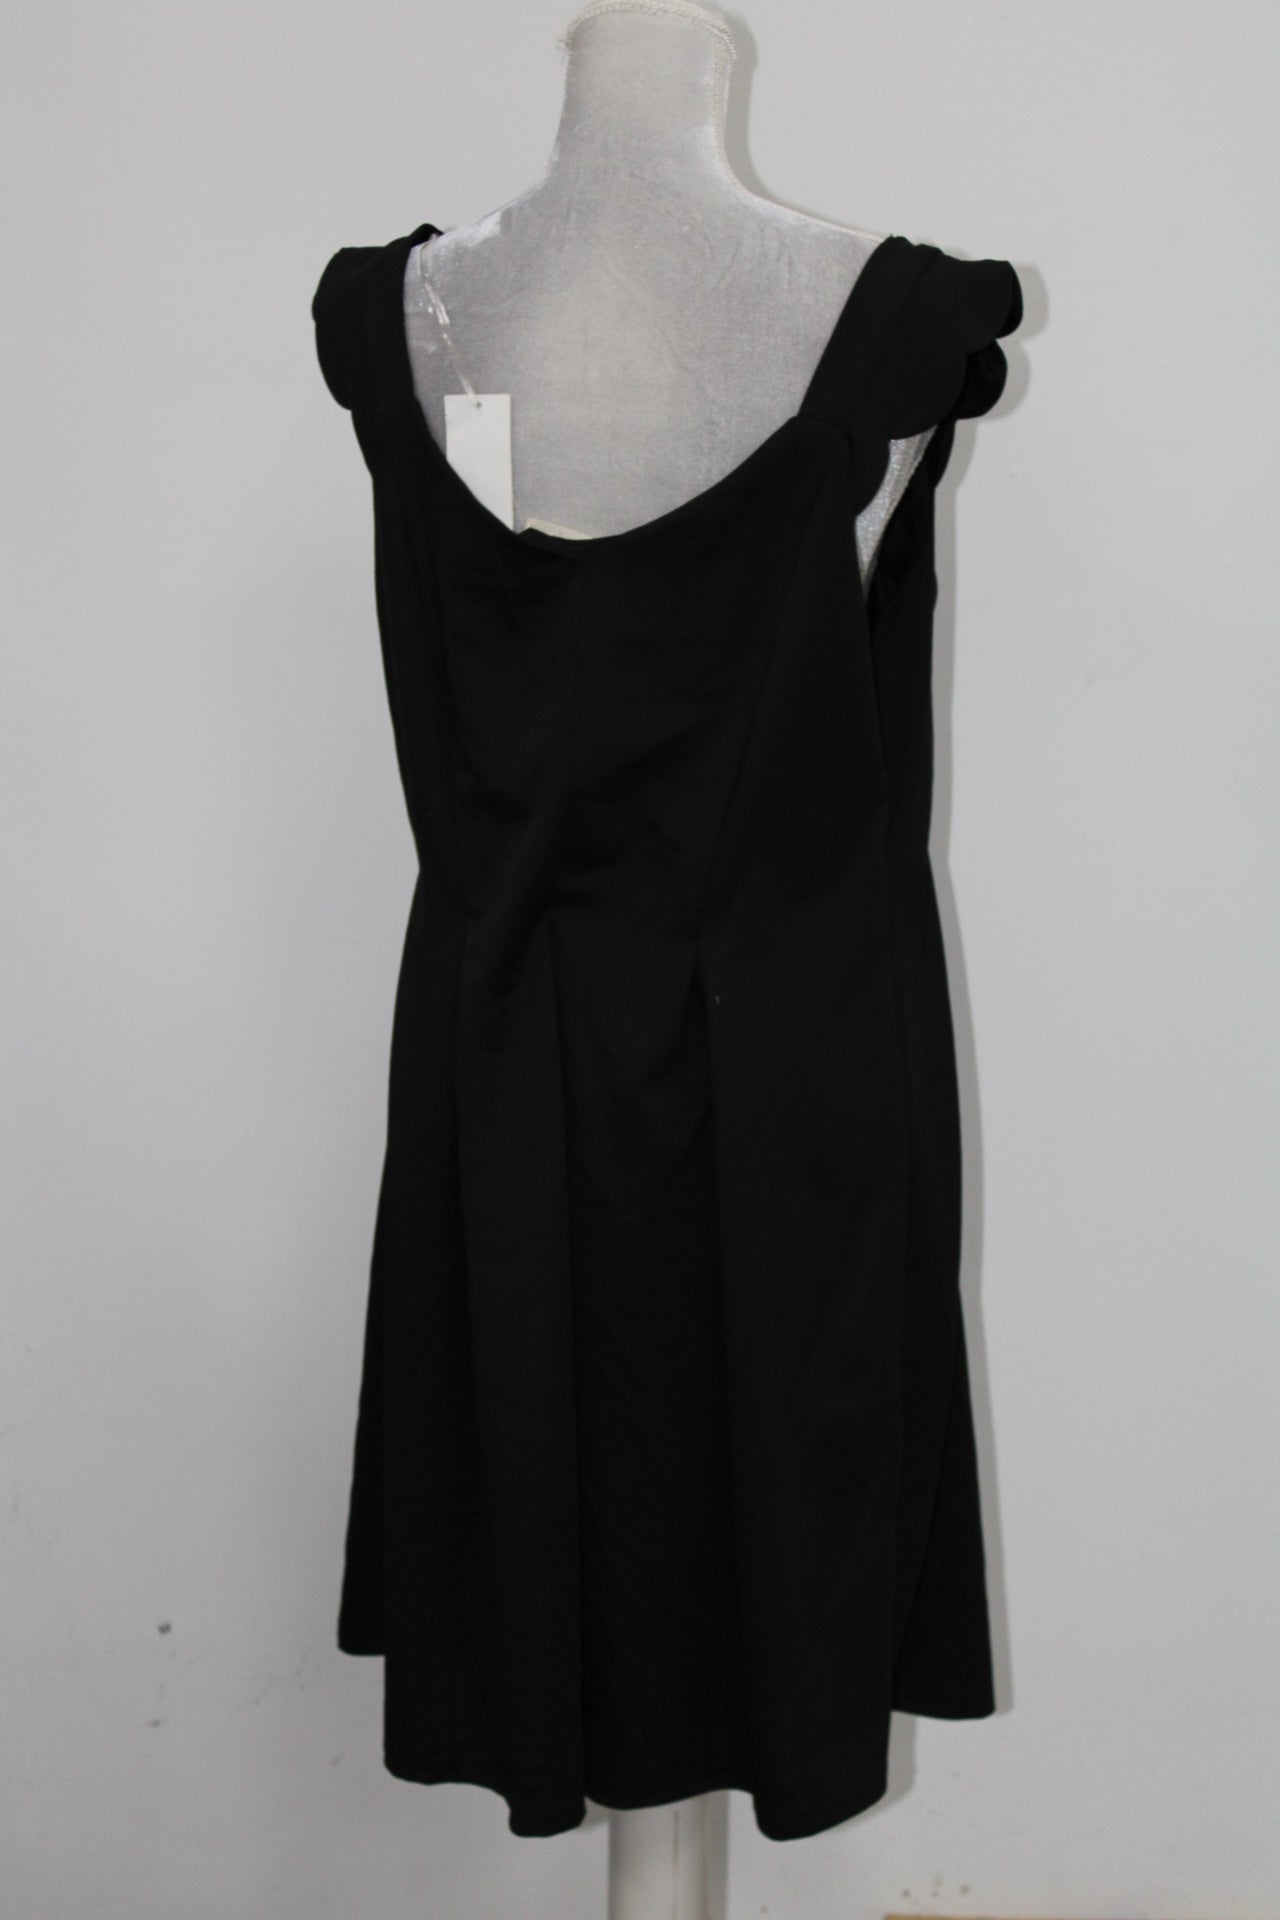 MONTEAU SCALLOP SCUBA DRESS, BLACK, 1X